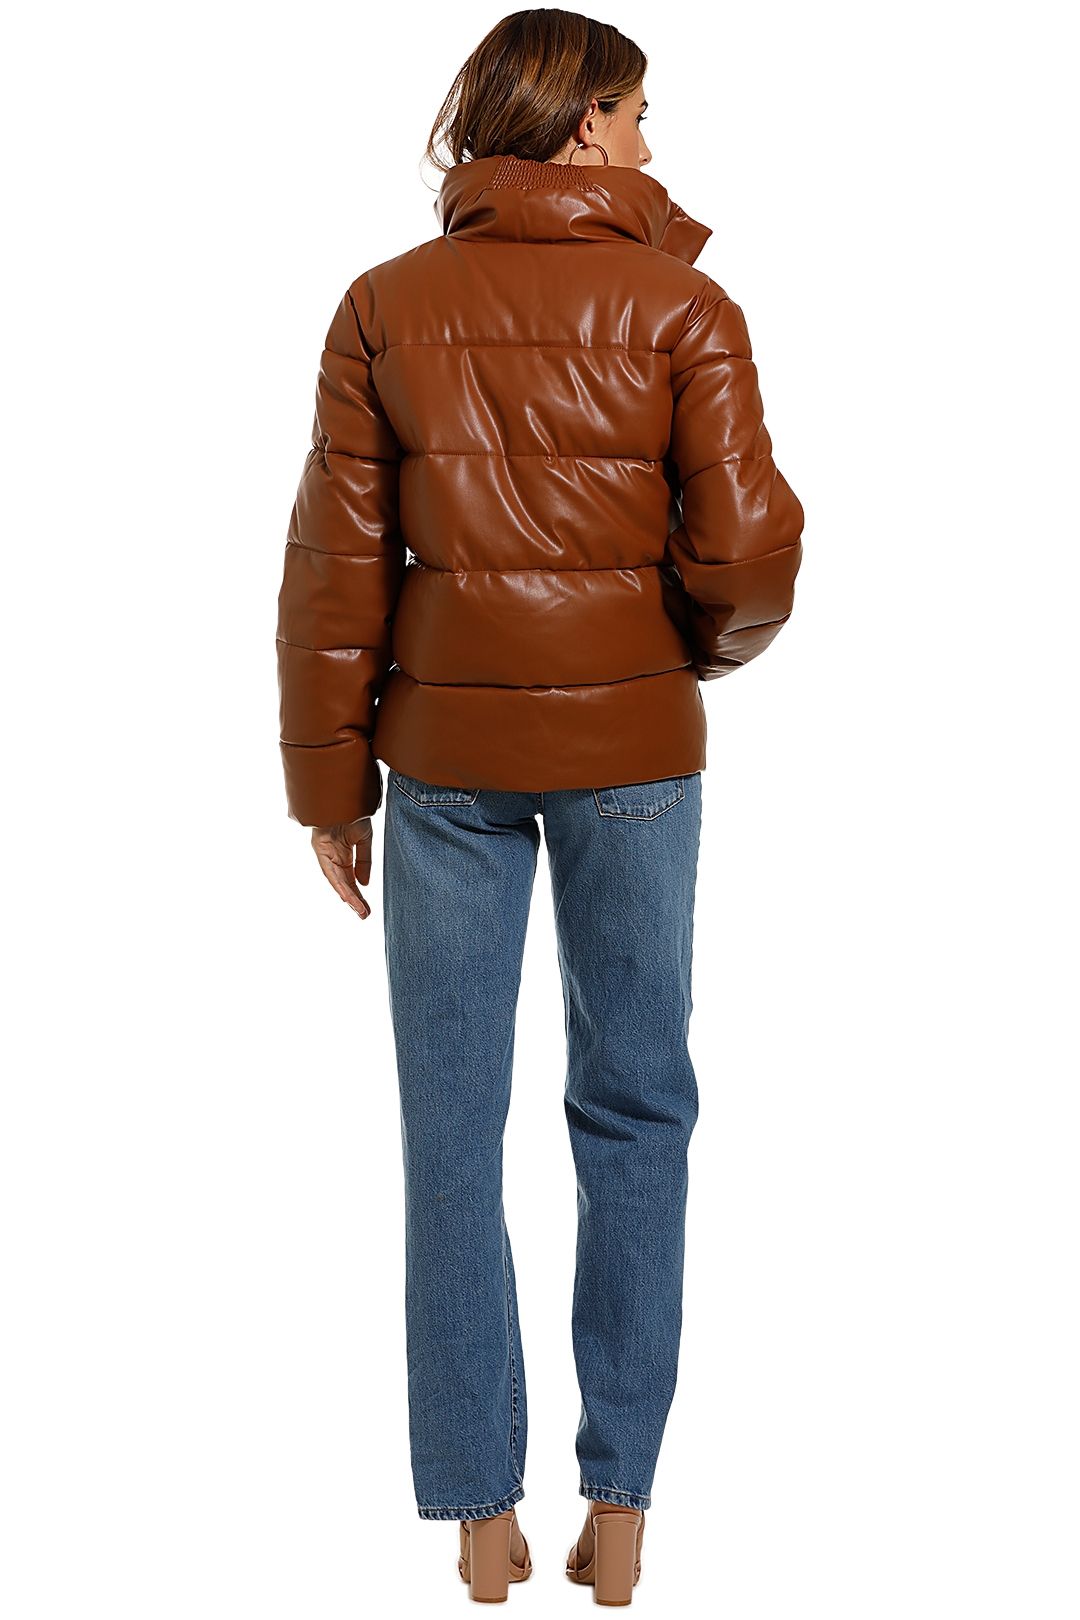 Unreal Fur Major Tom Puffer Jacket Leather